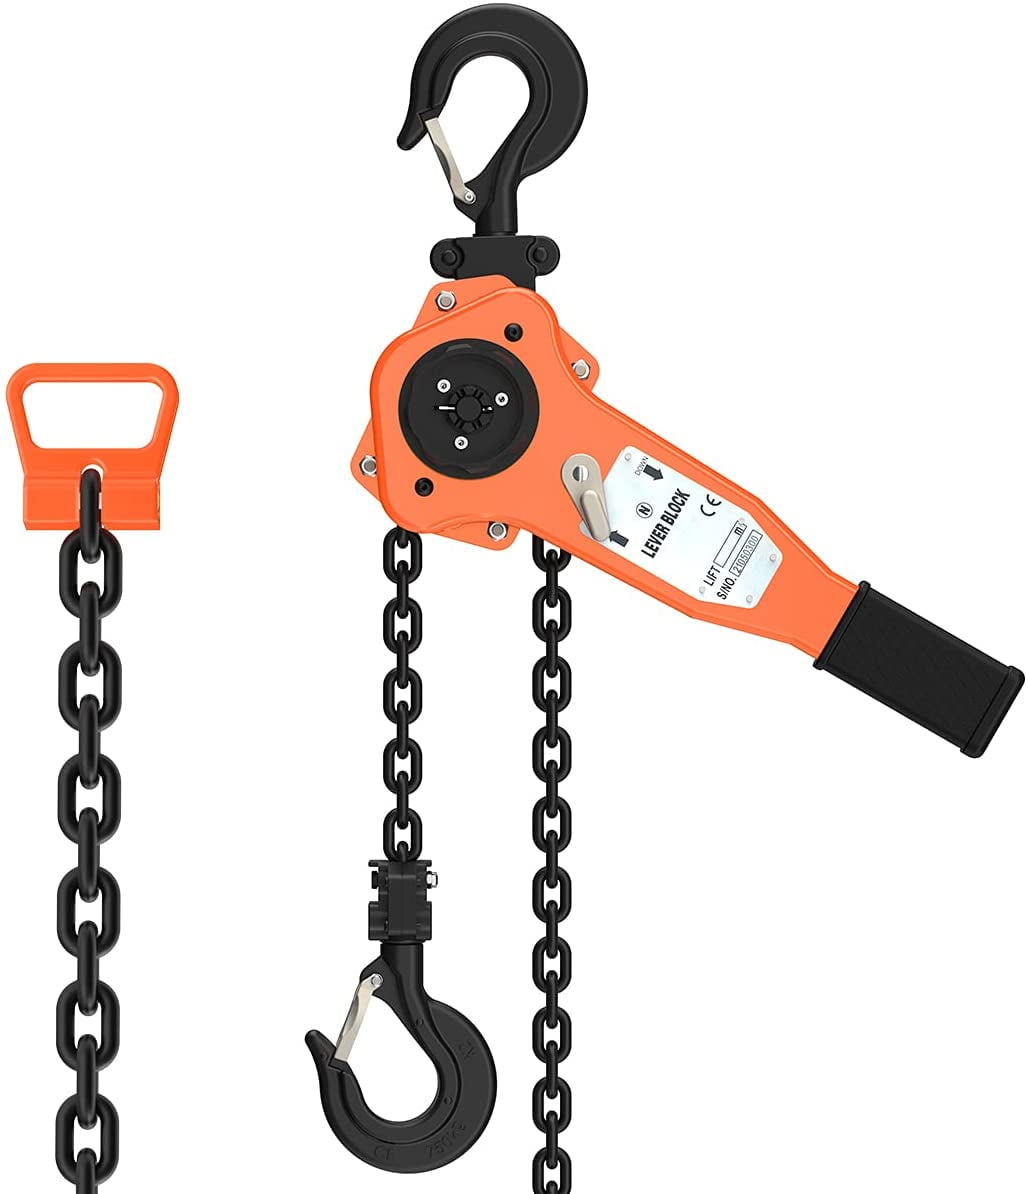 TOYO-INTL Manual Lever Hoist Chain Hoist 0.75Ton 1650Lbs 3M 10ft Lift Manual Chain Ratchet Lever Block Industrial Grade Type Come Along Lift Puller 